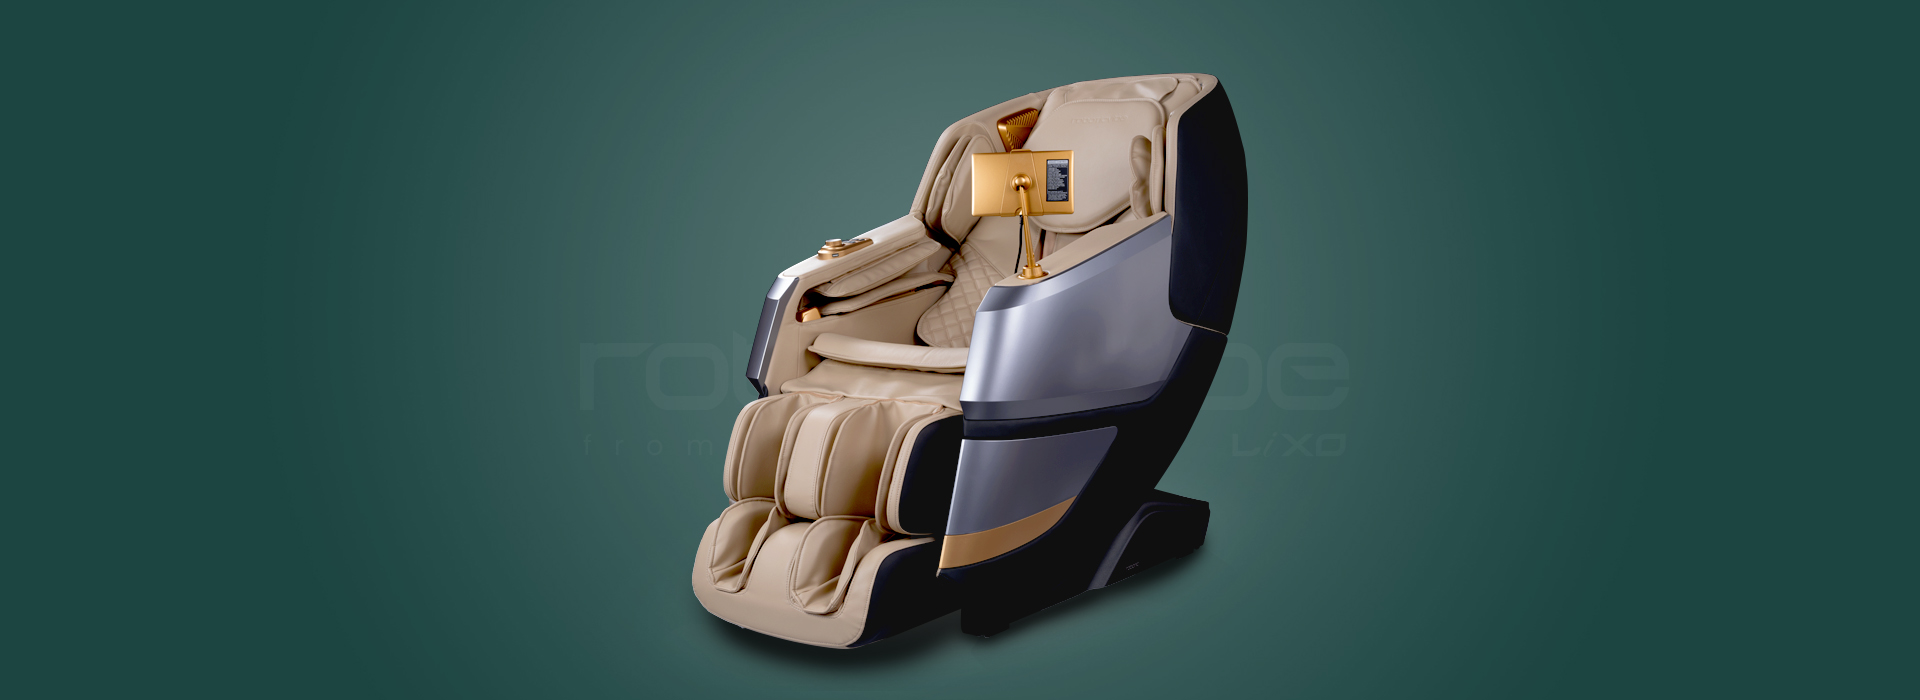 Buy 3d Robotic Massage Chair